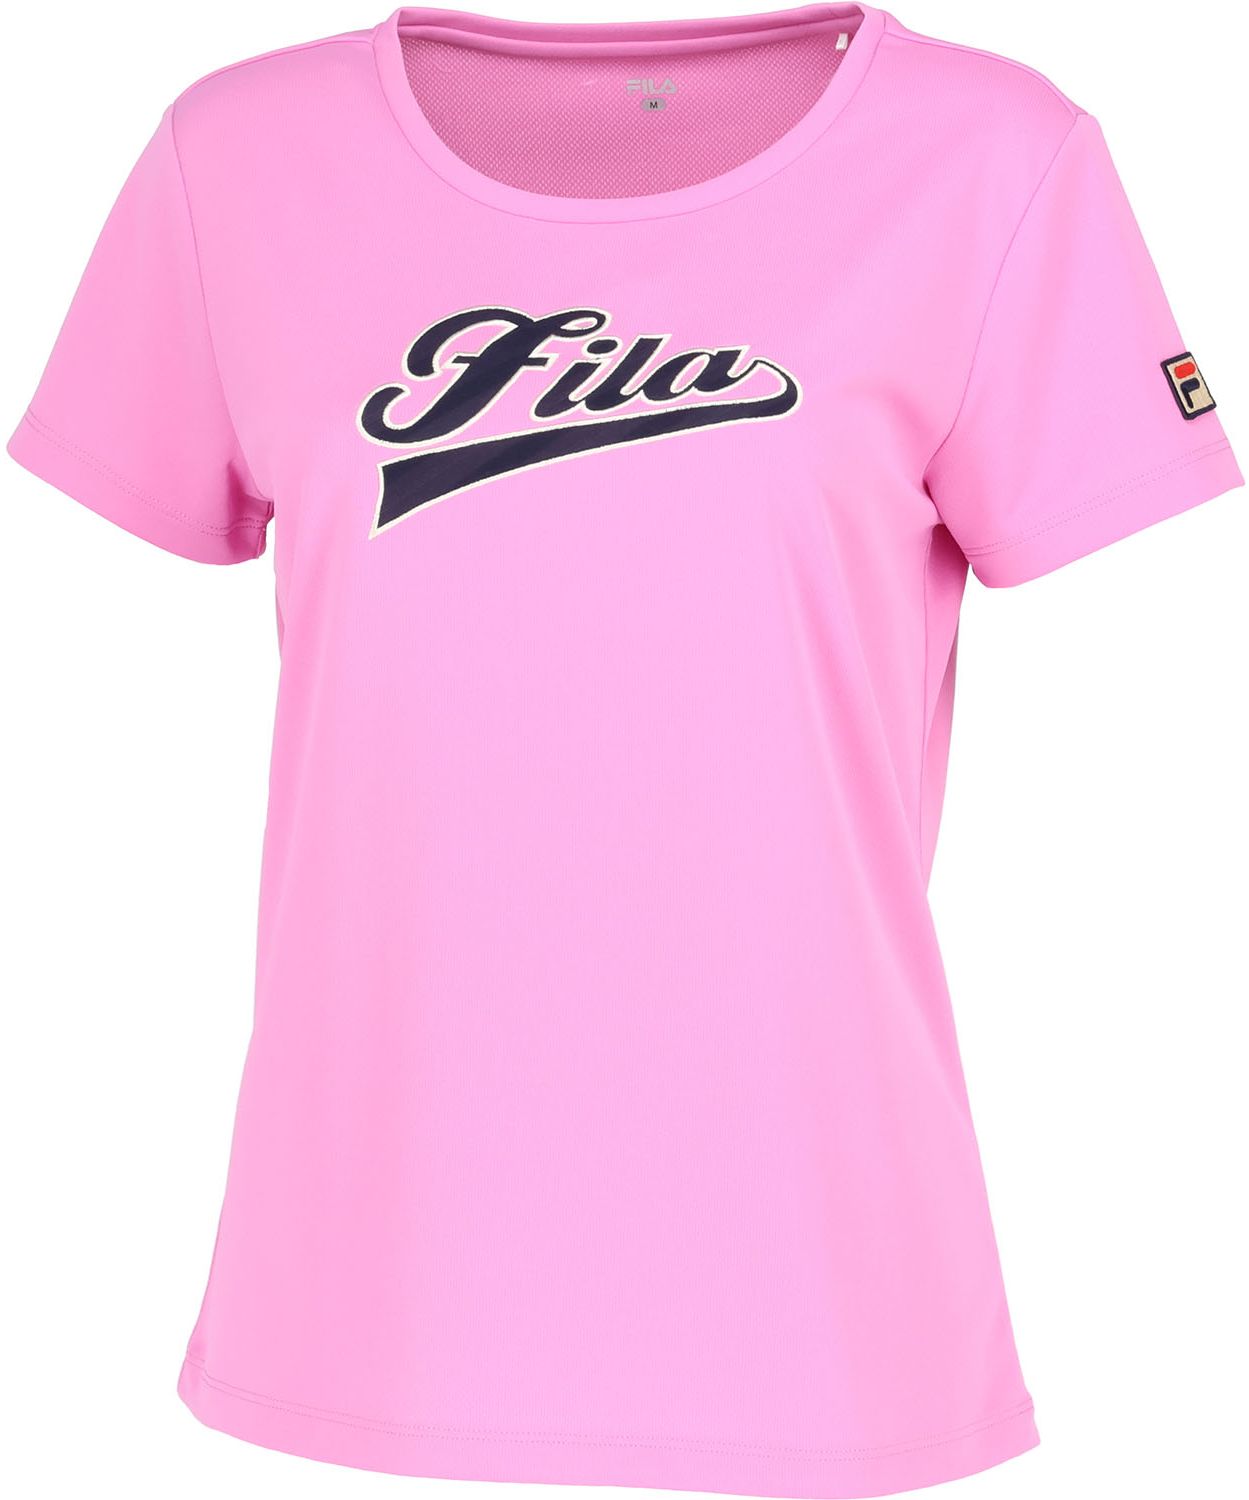 【FILA 公式】【テニス】パイルメッシュボーダー バックホールメッシュ アップリケTシャツ レディース/ピンク(ファッション・アクセサリー u003e 衣料品 u003e トップス)